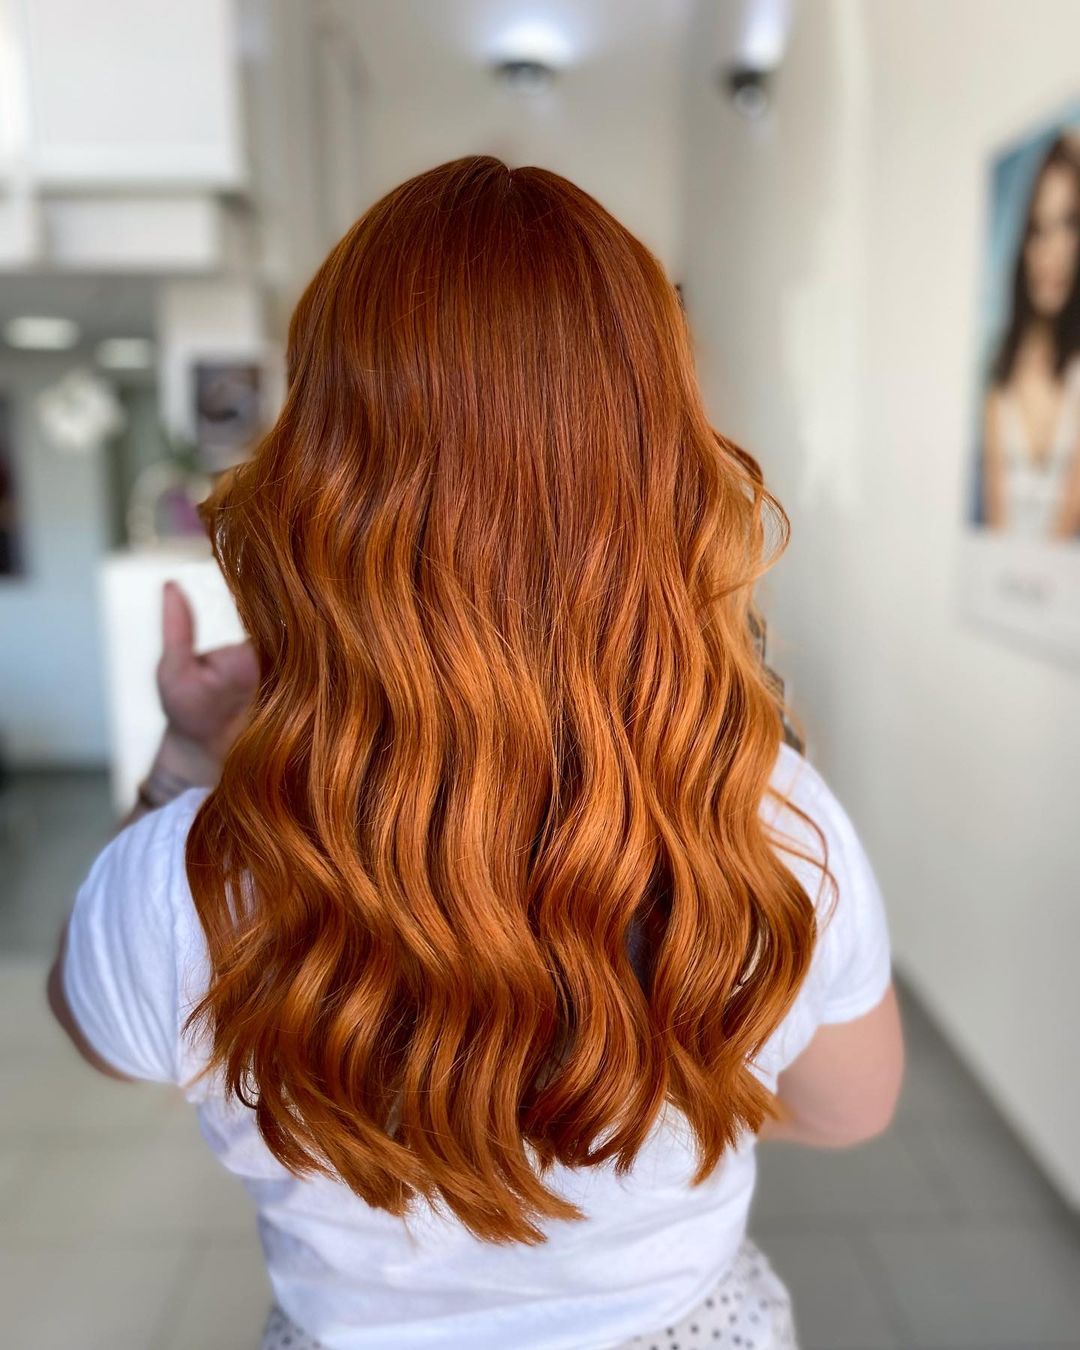 redhead with wavy hair 